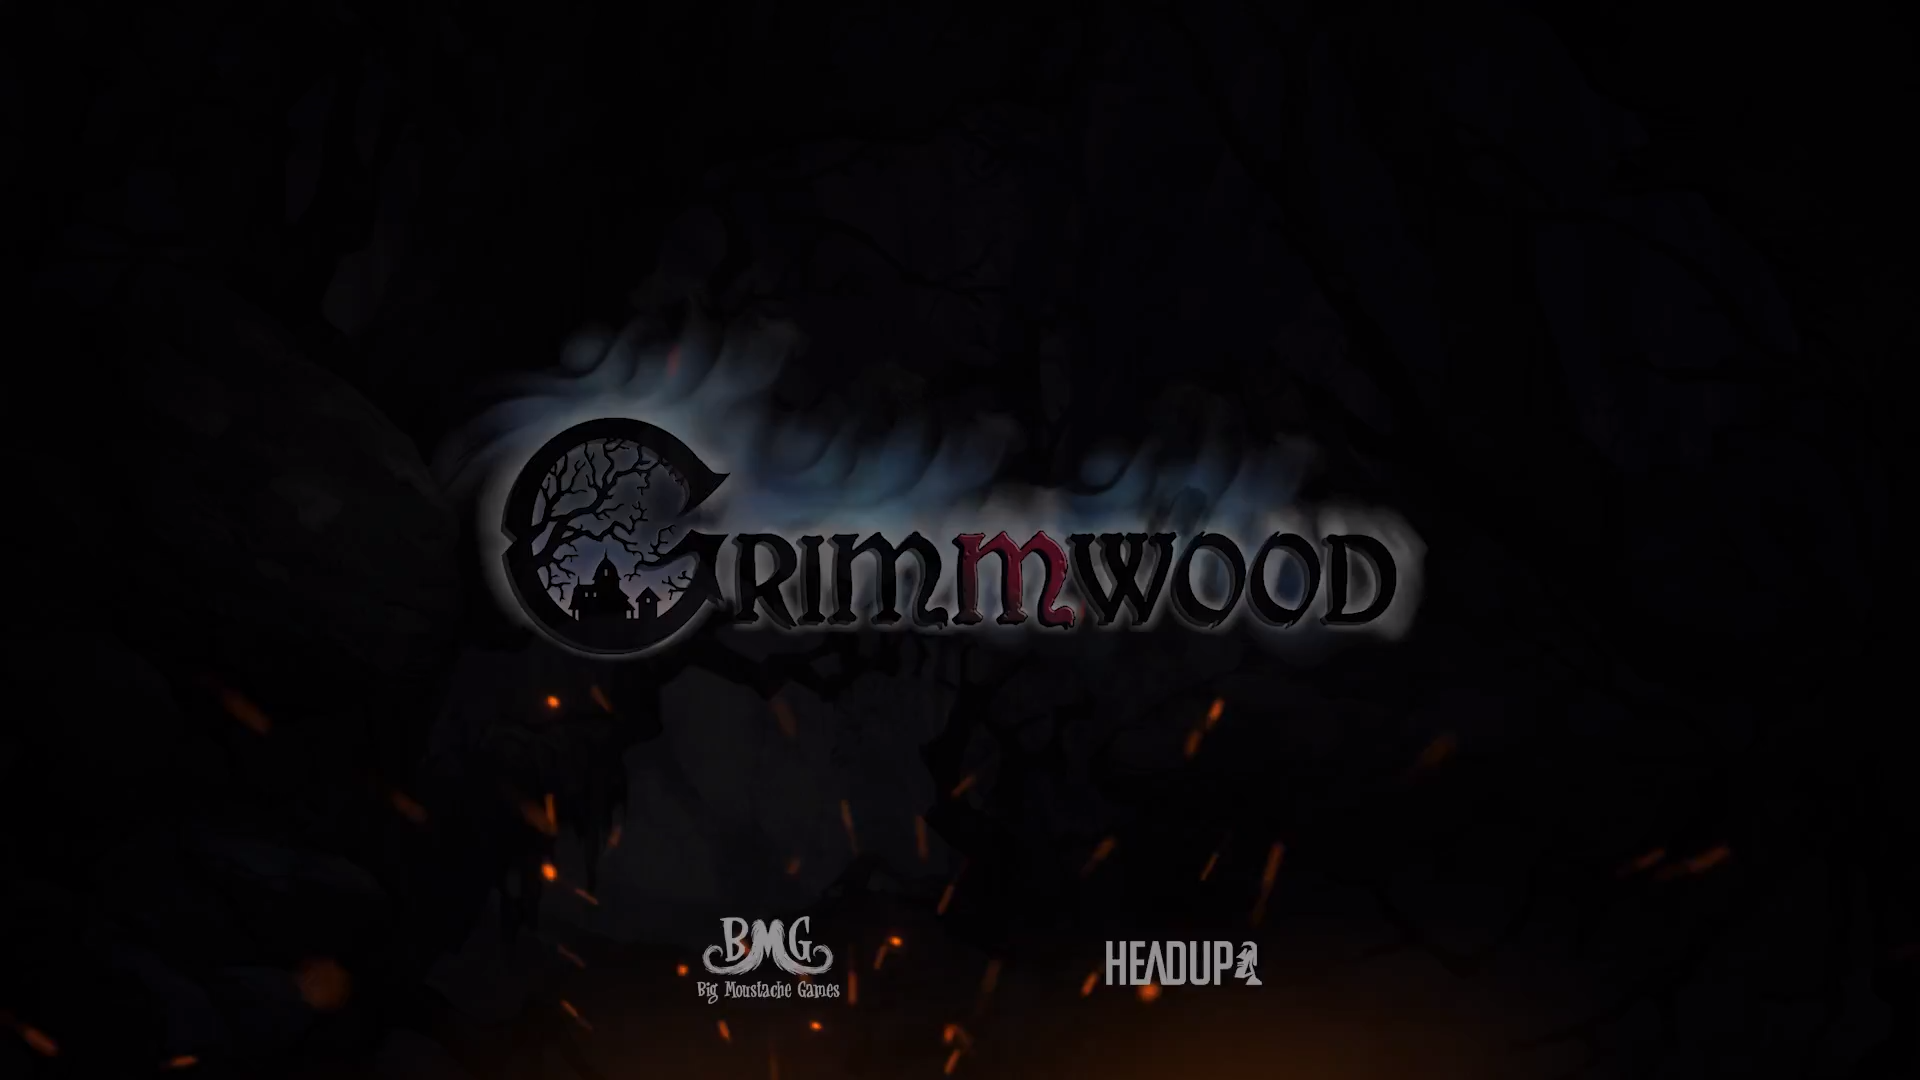 Grimmwood